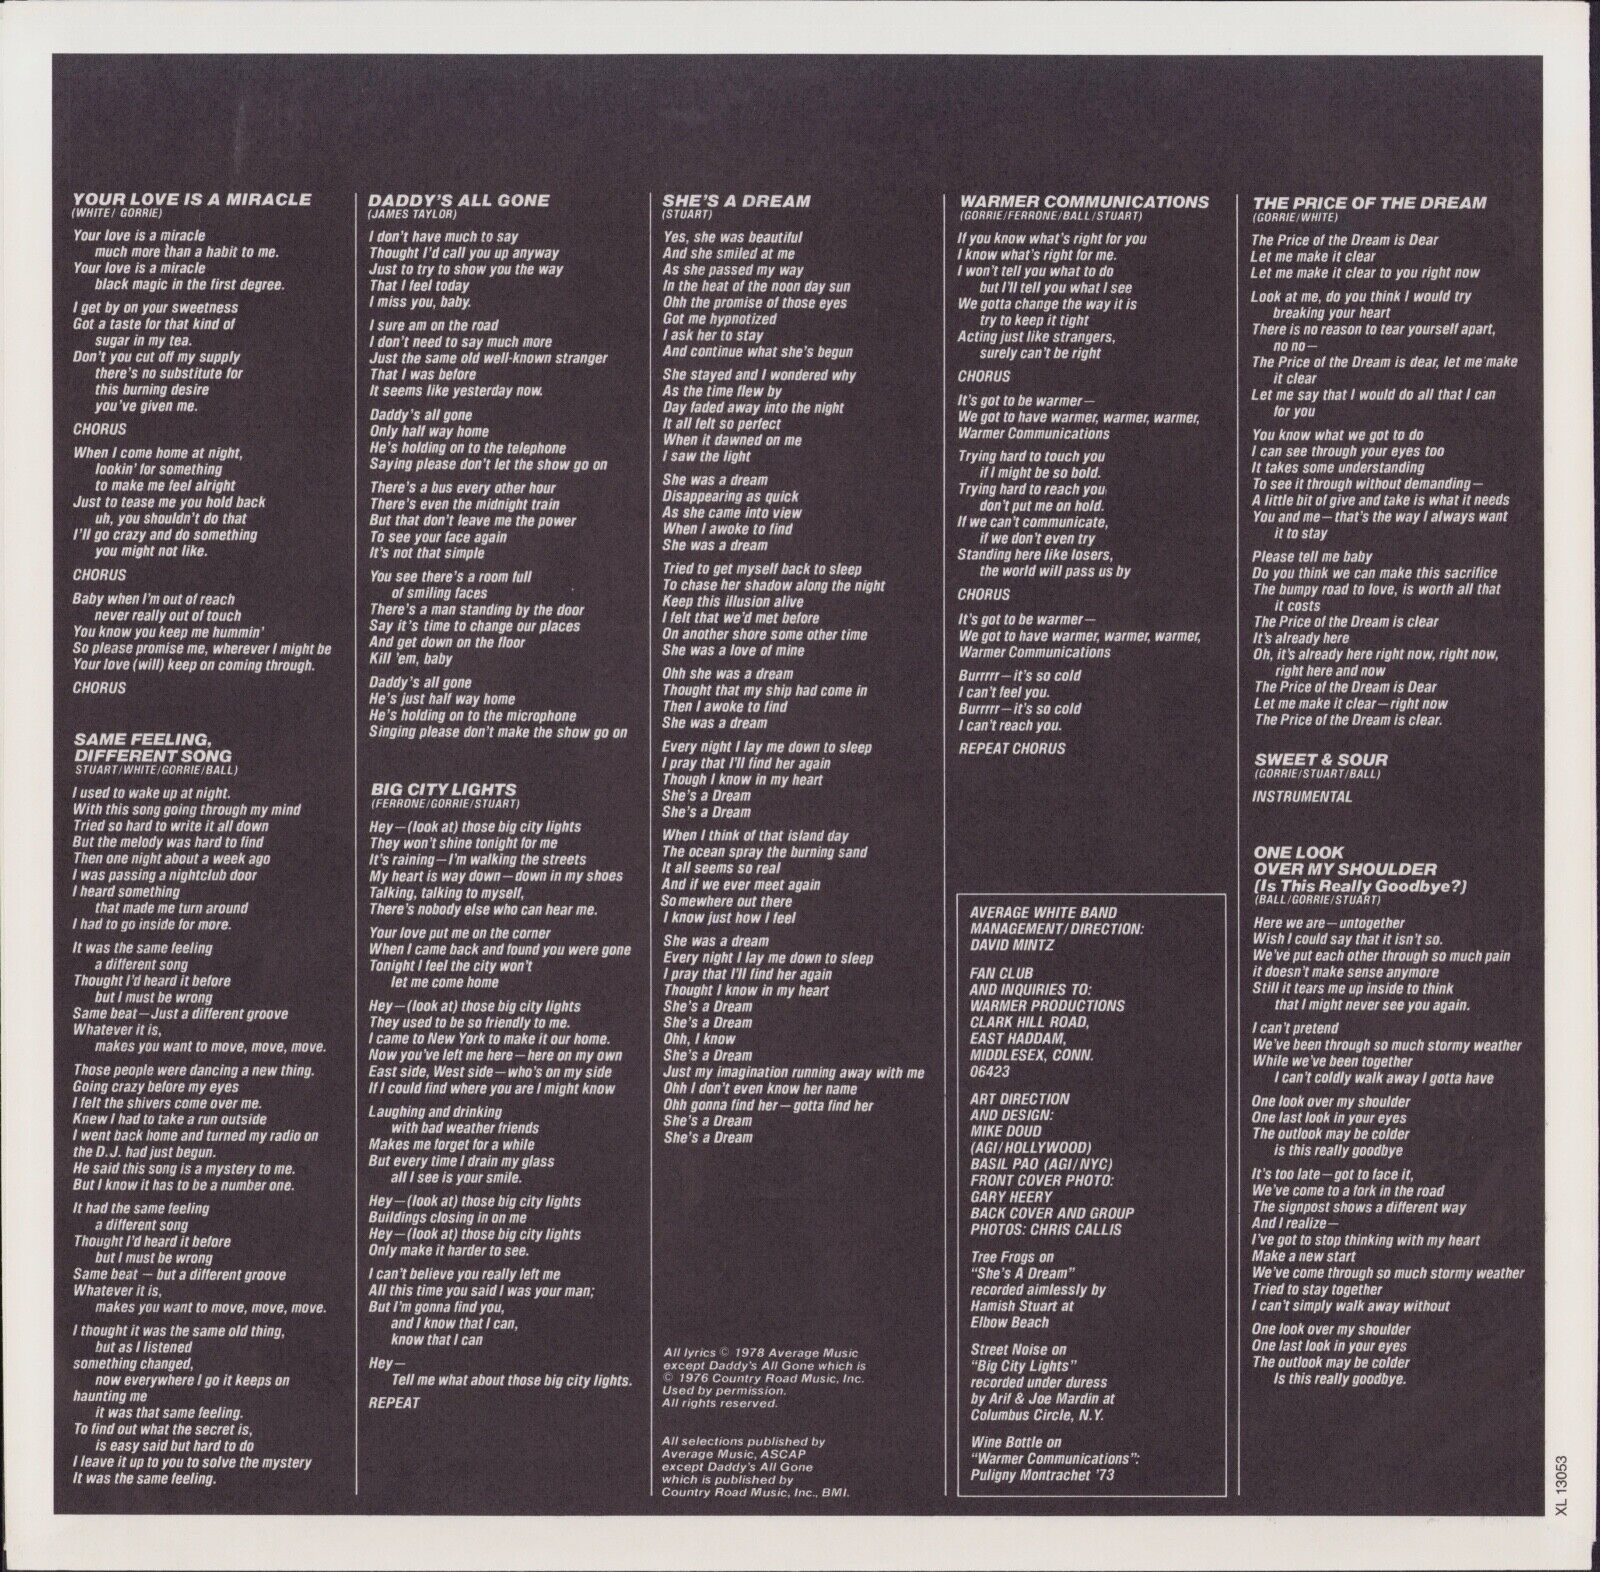 Average White Band ‎- Warmer Communications Vinyl LP